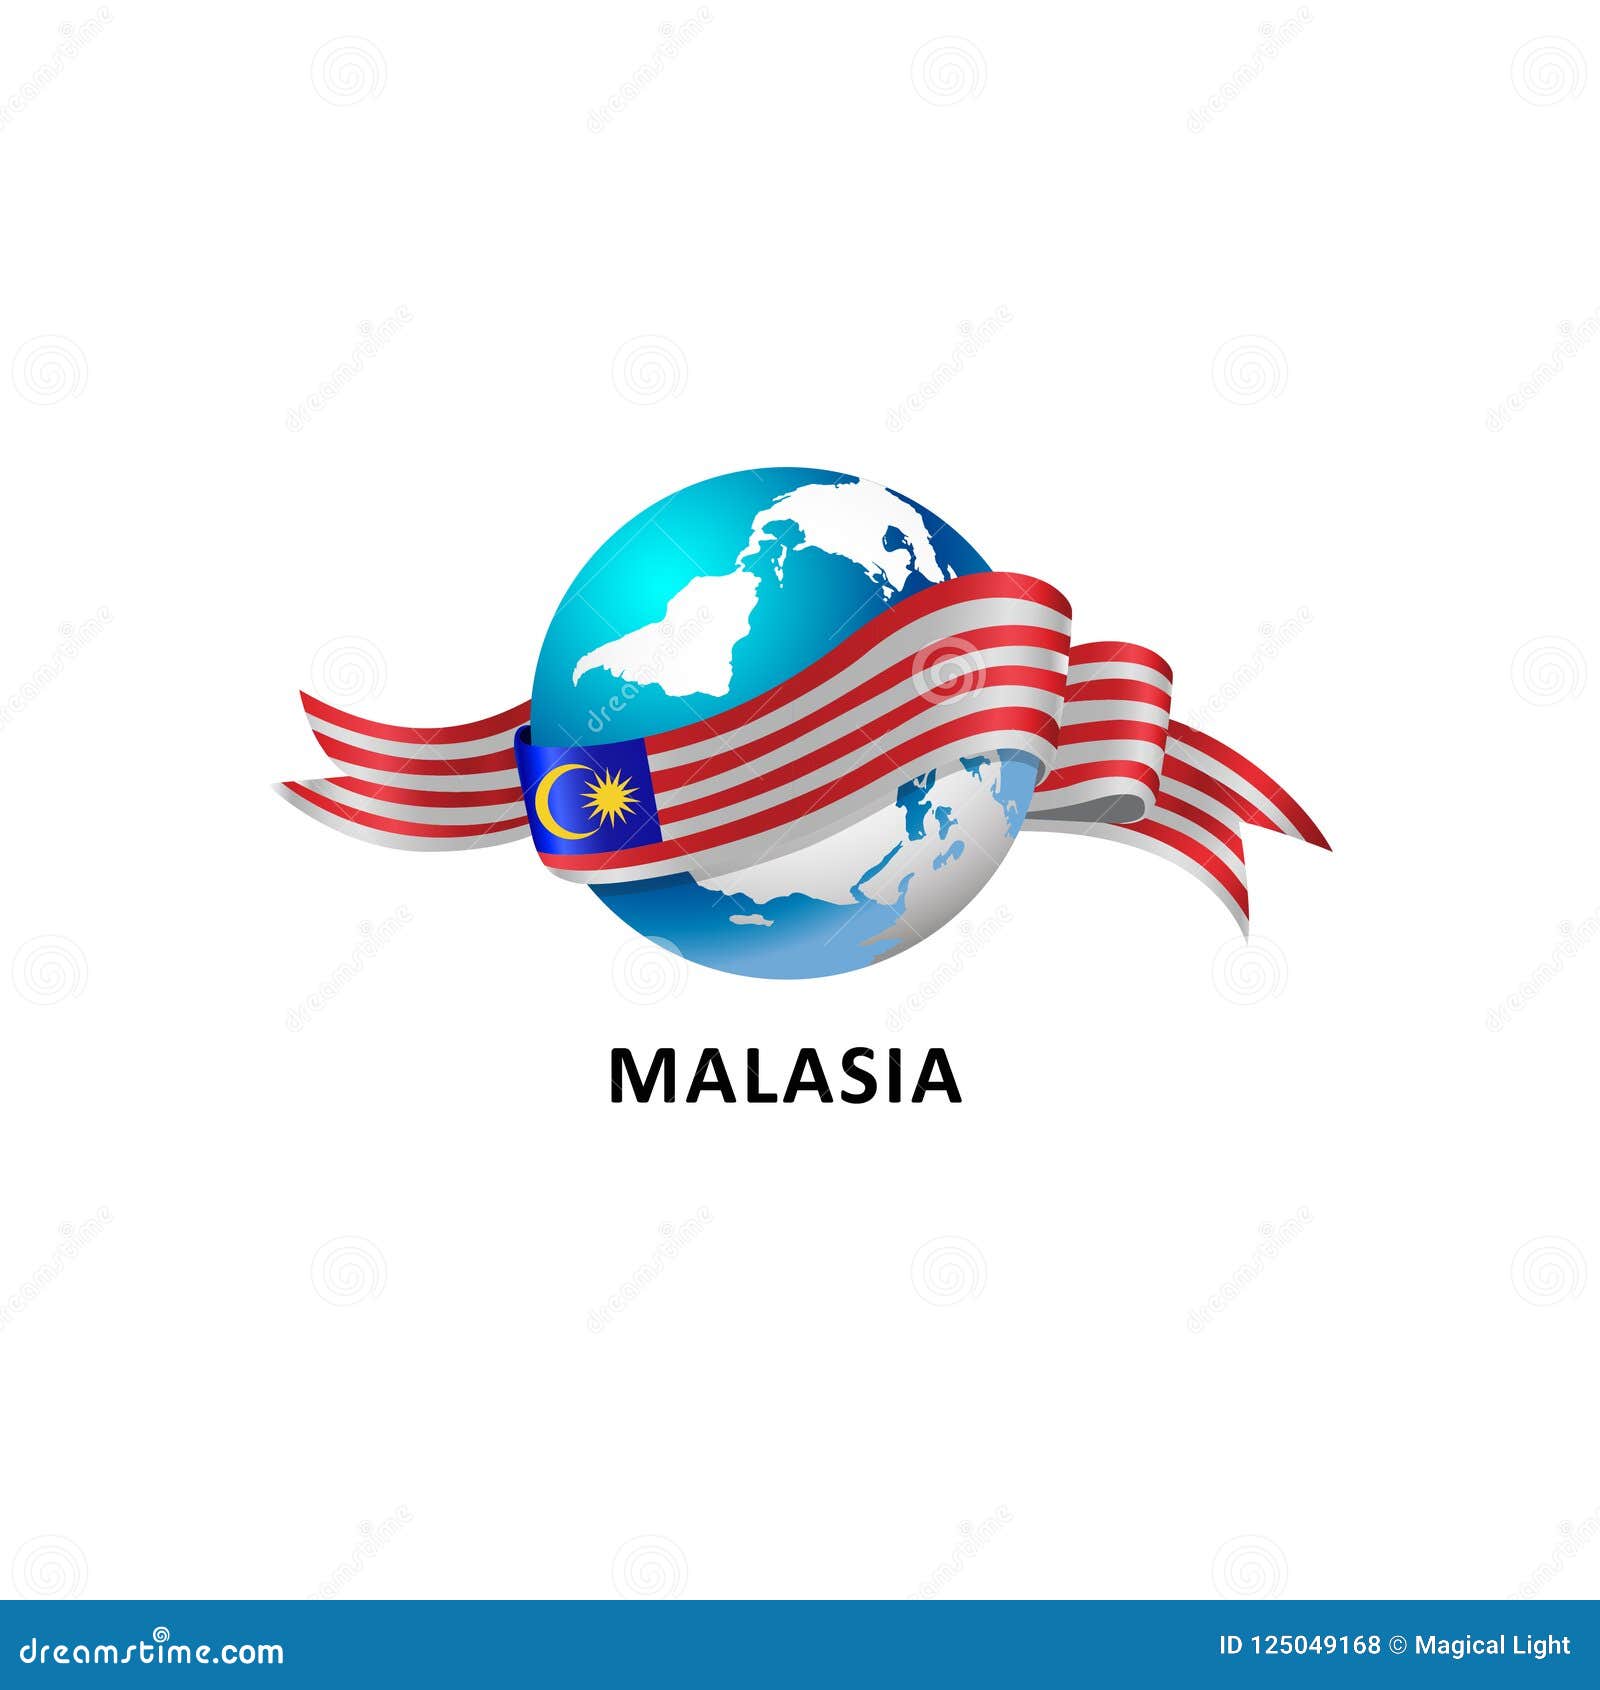 world with malasia flag